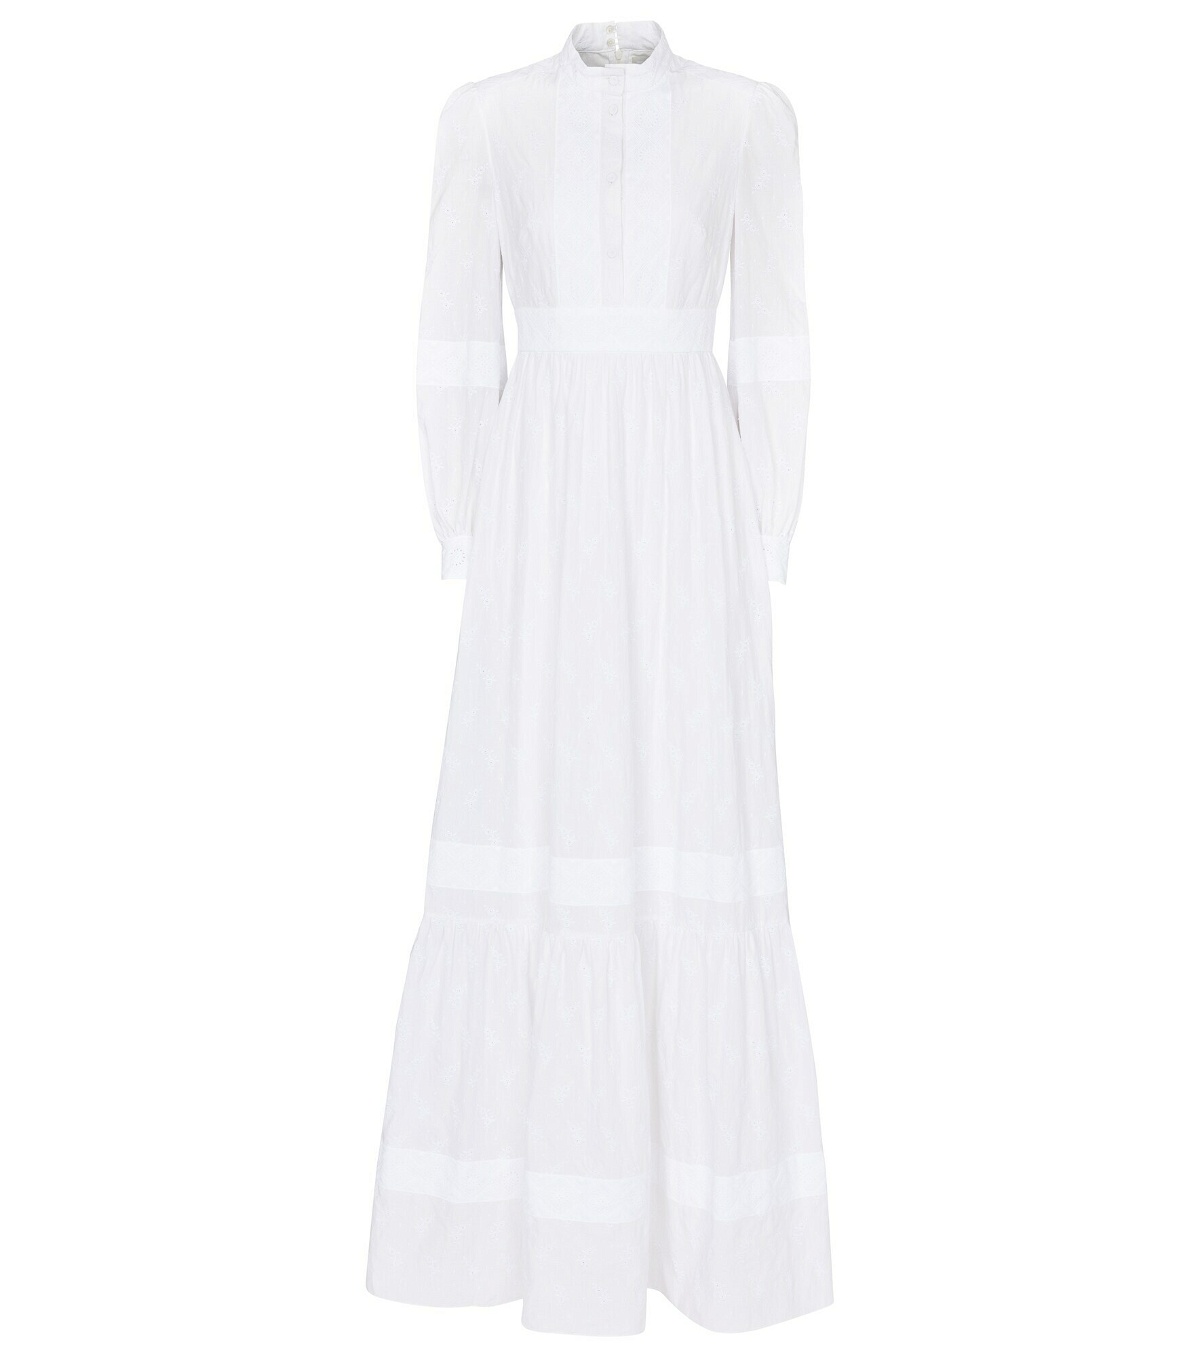 Erdem - Ulrica cotton-blend voile bridal gown Erdem